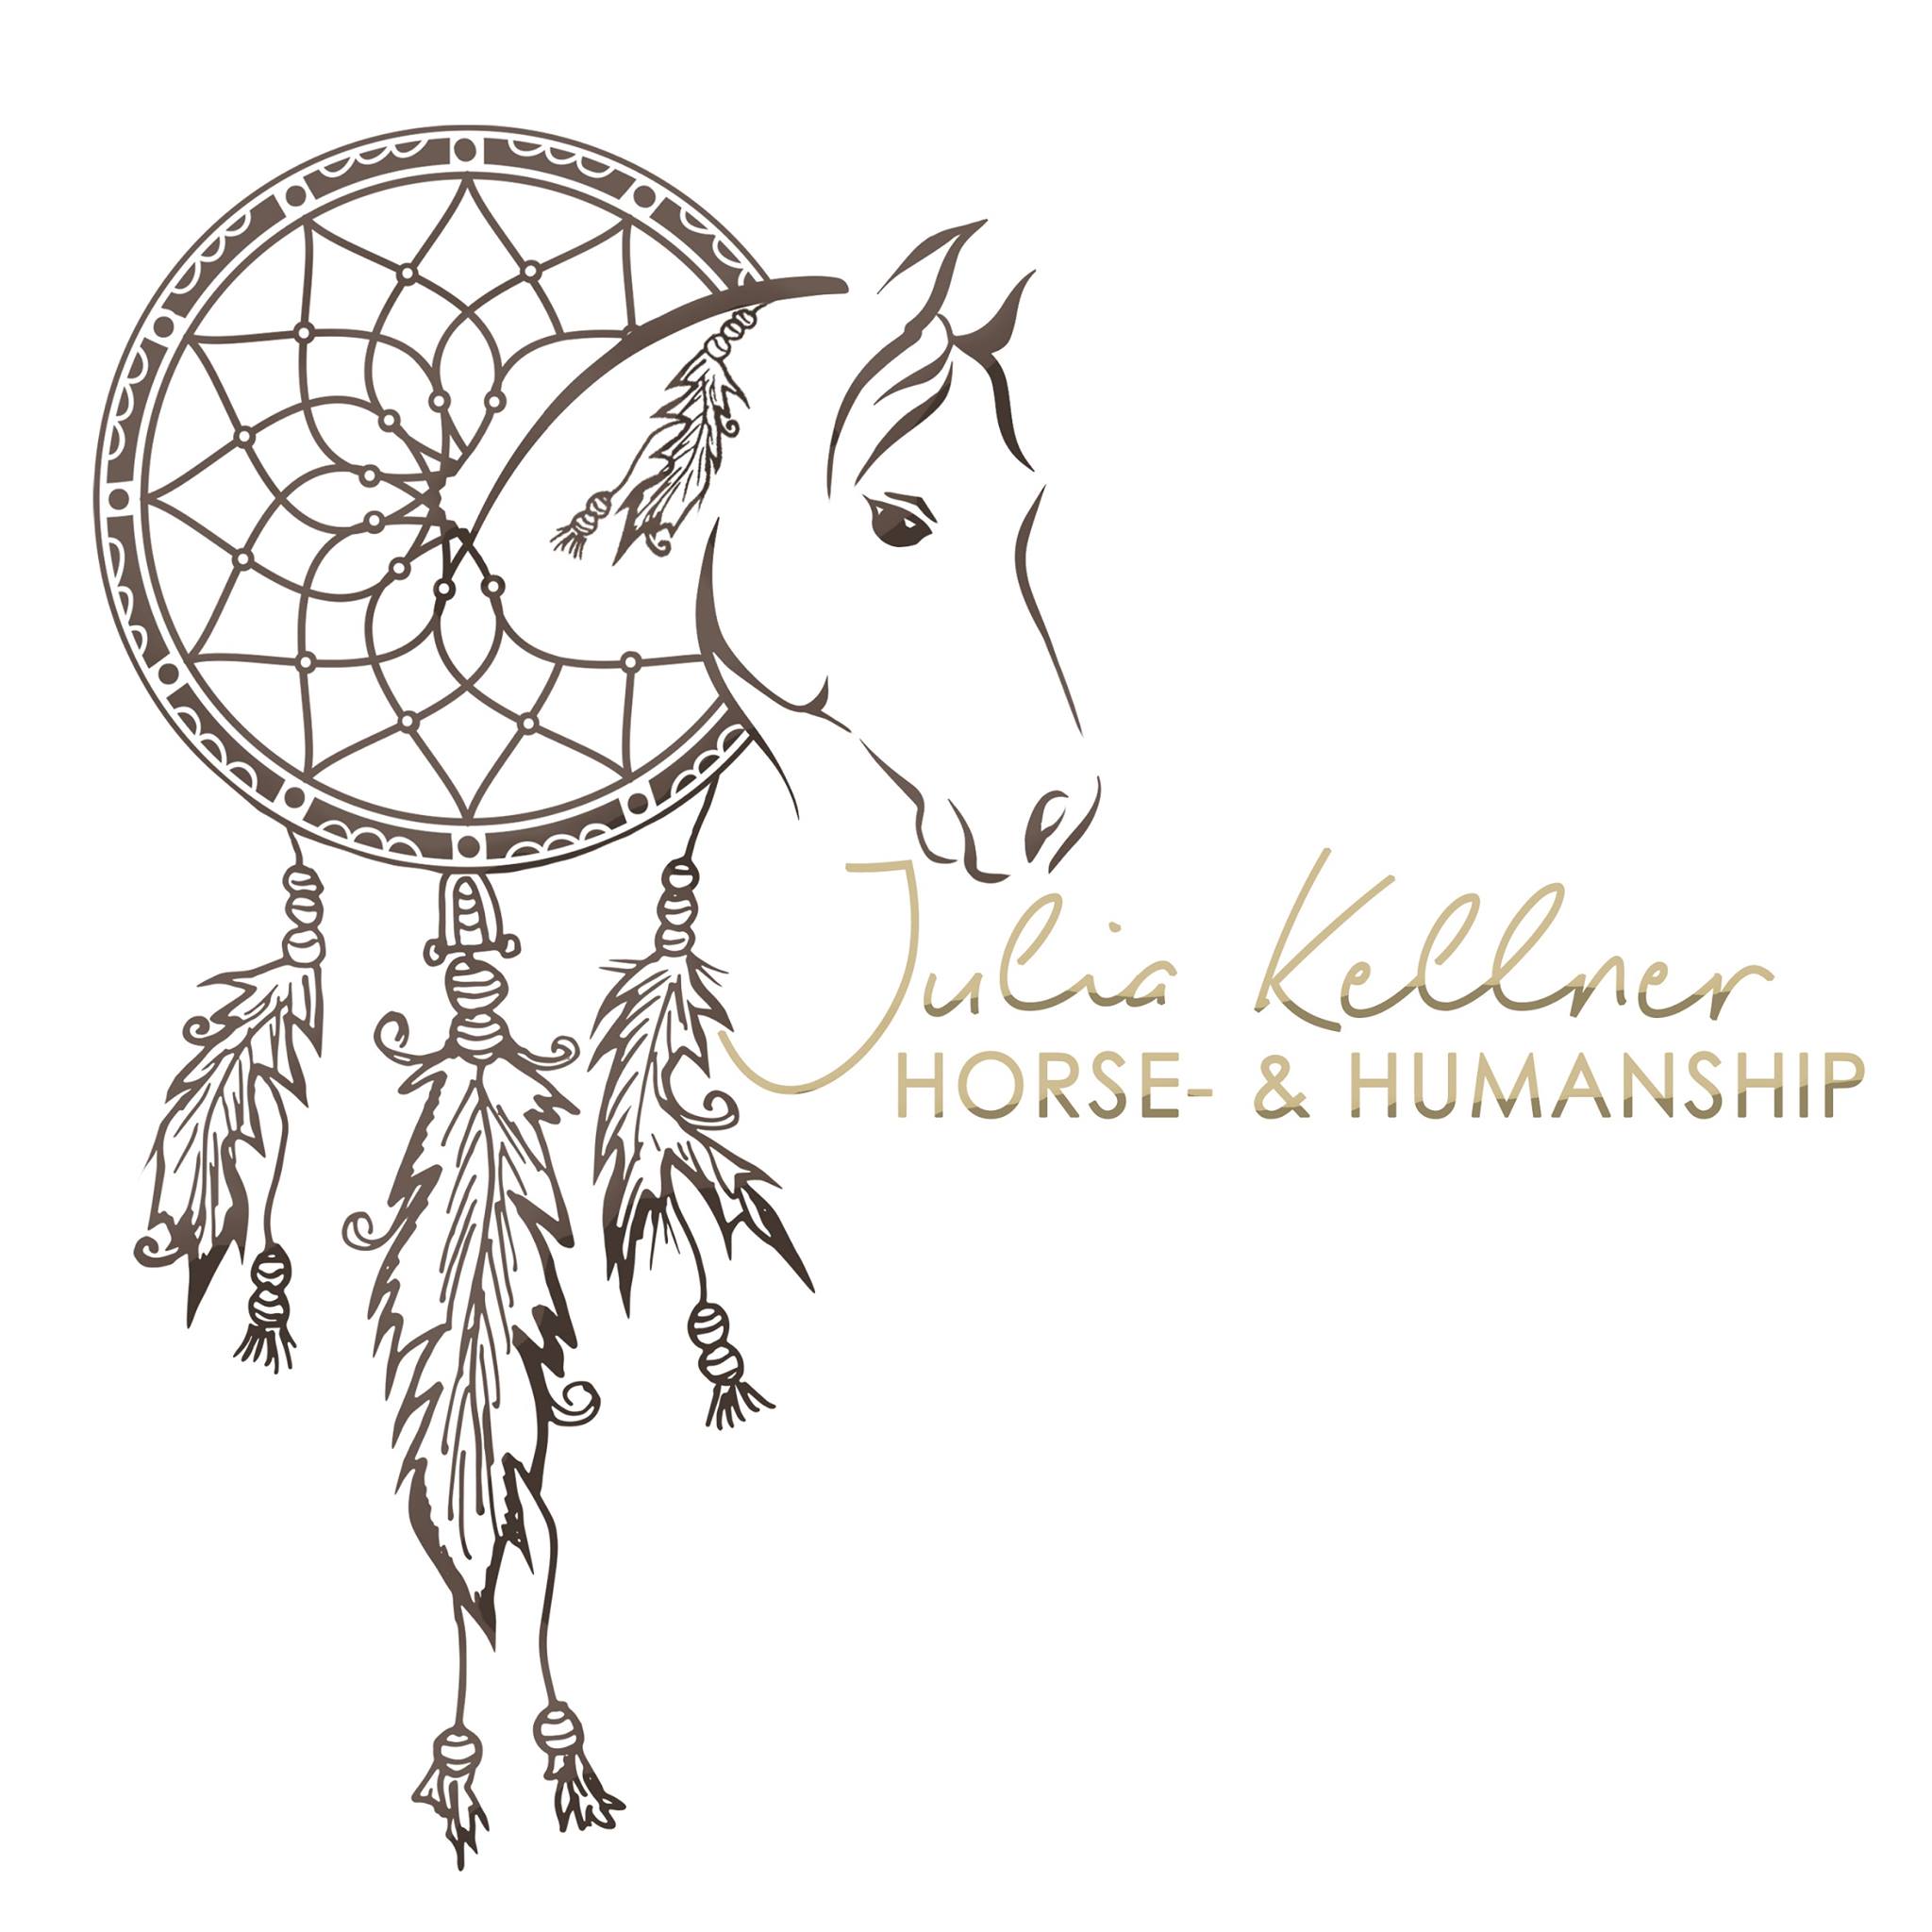 Julia Kellner Horse & Humanship